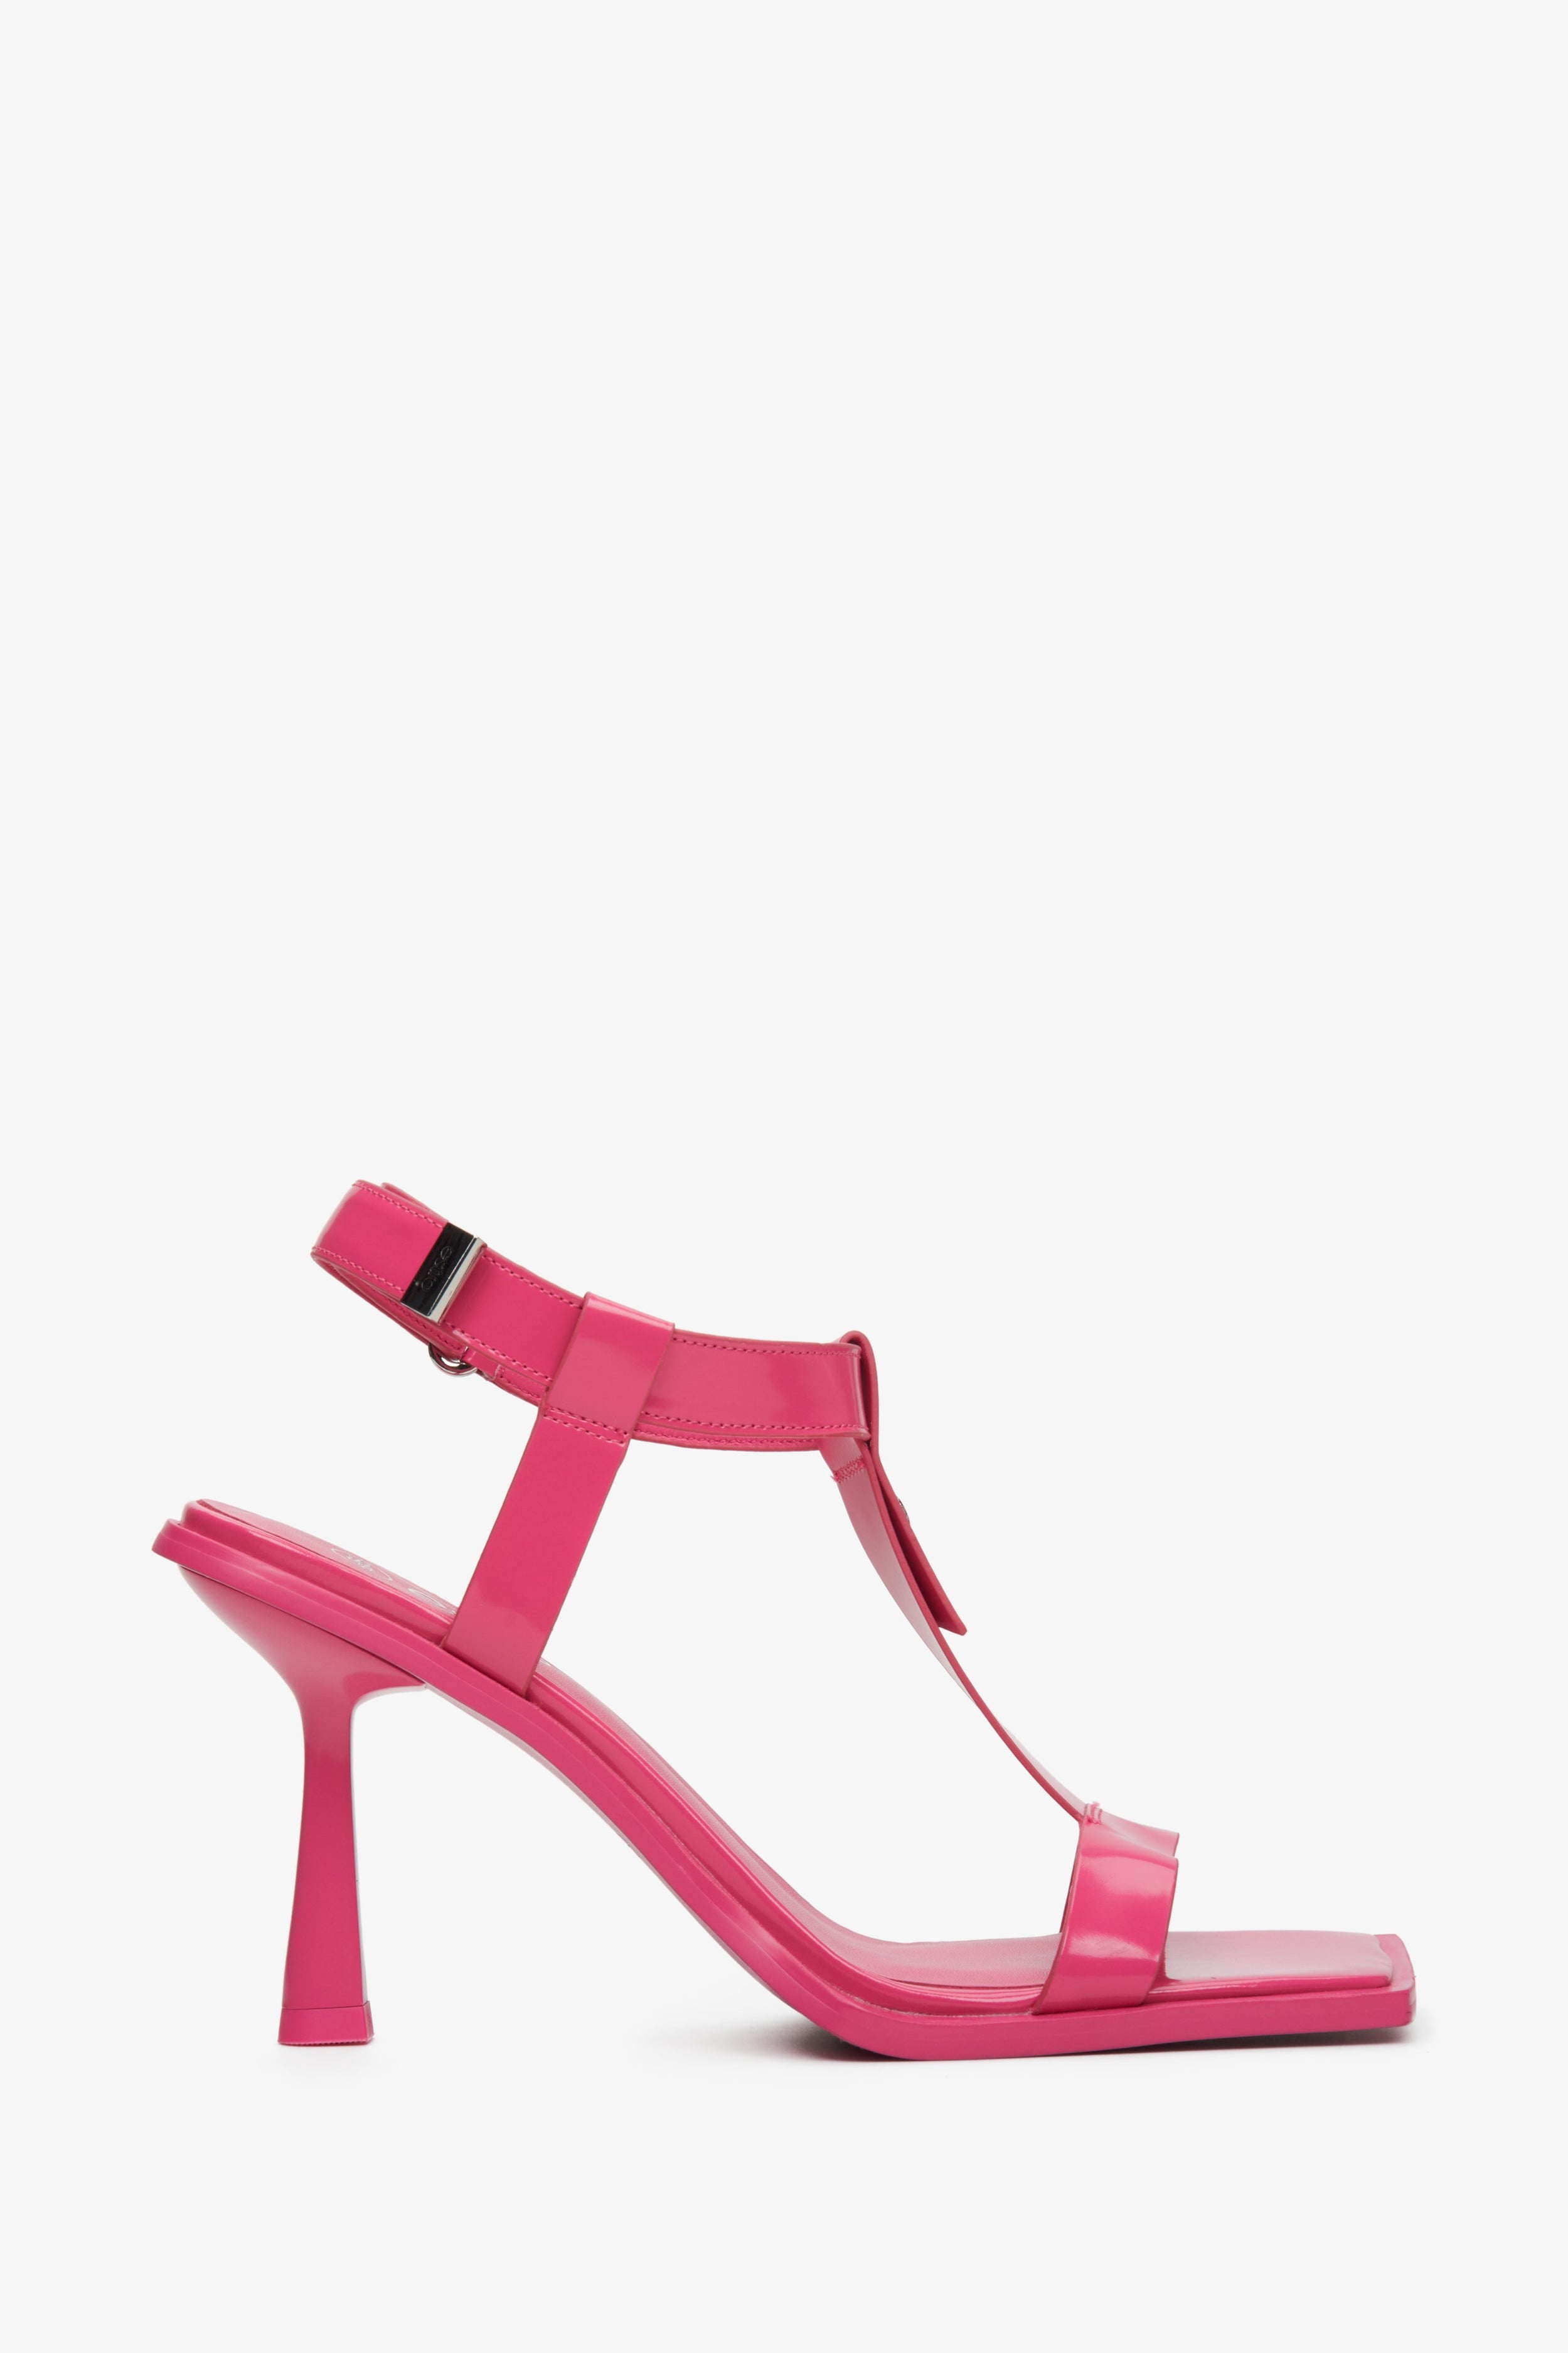 Estro: Różowe sandały damskie na szpilce ze skóry naturalnej